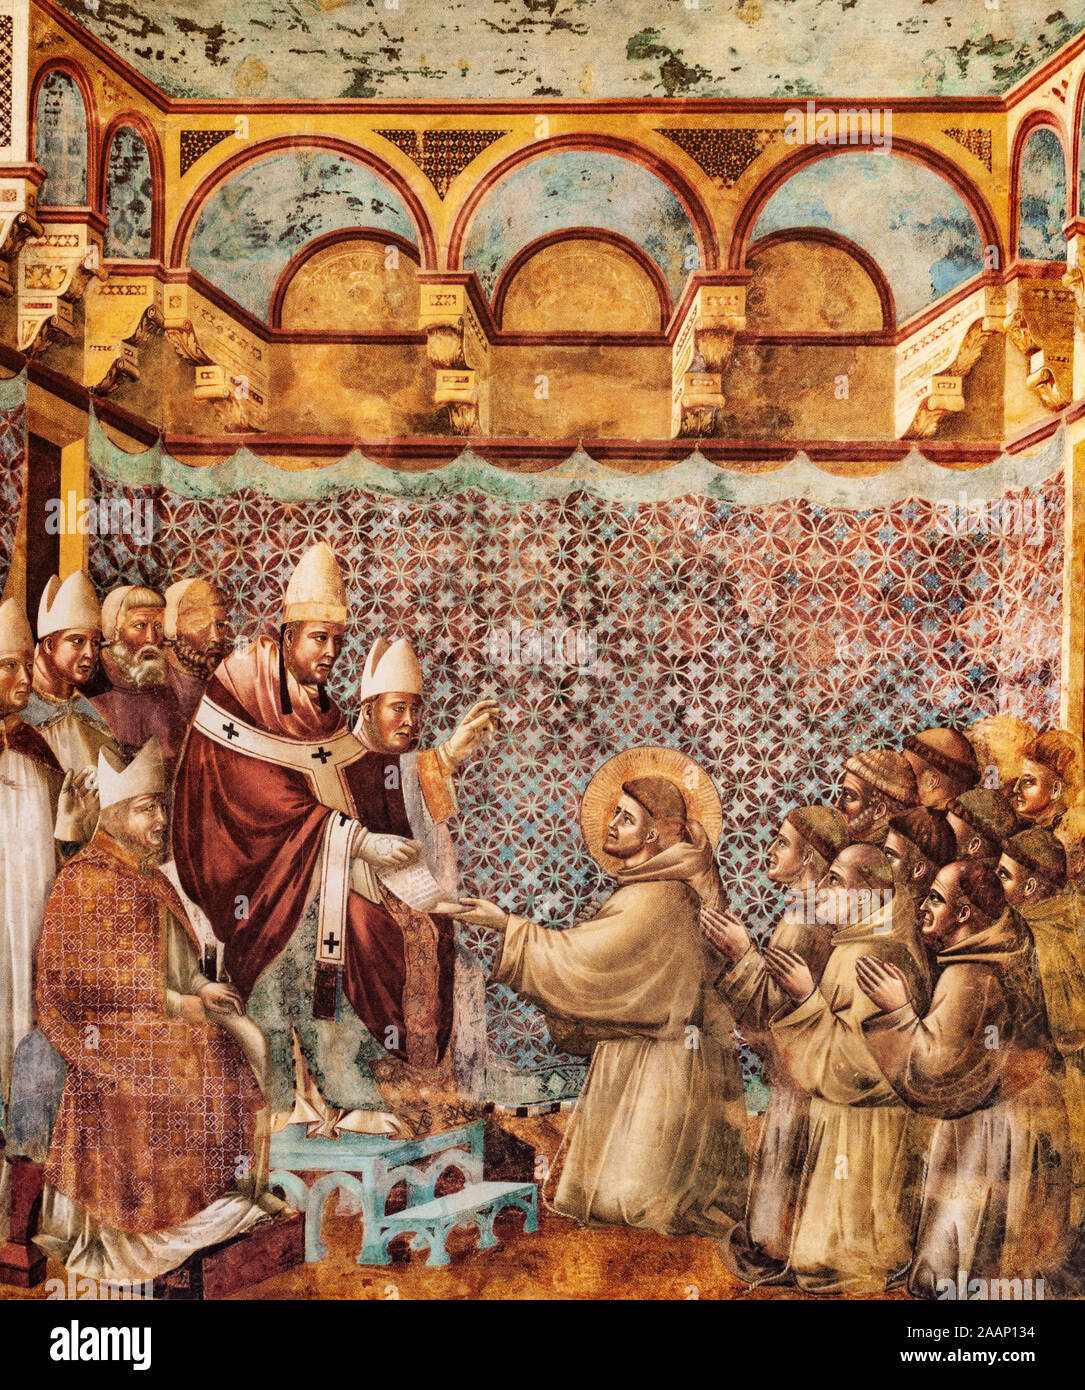 Giotto: Italian Fresco Painter